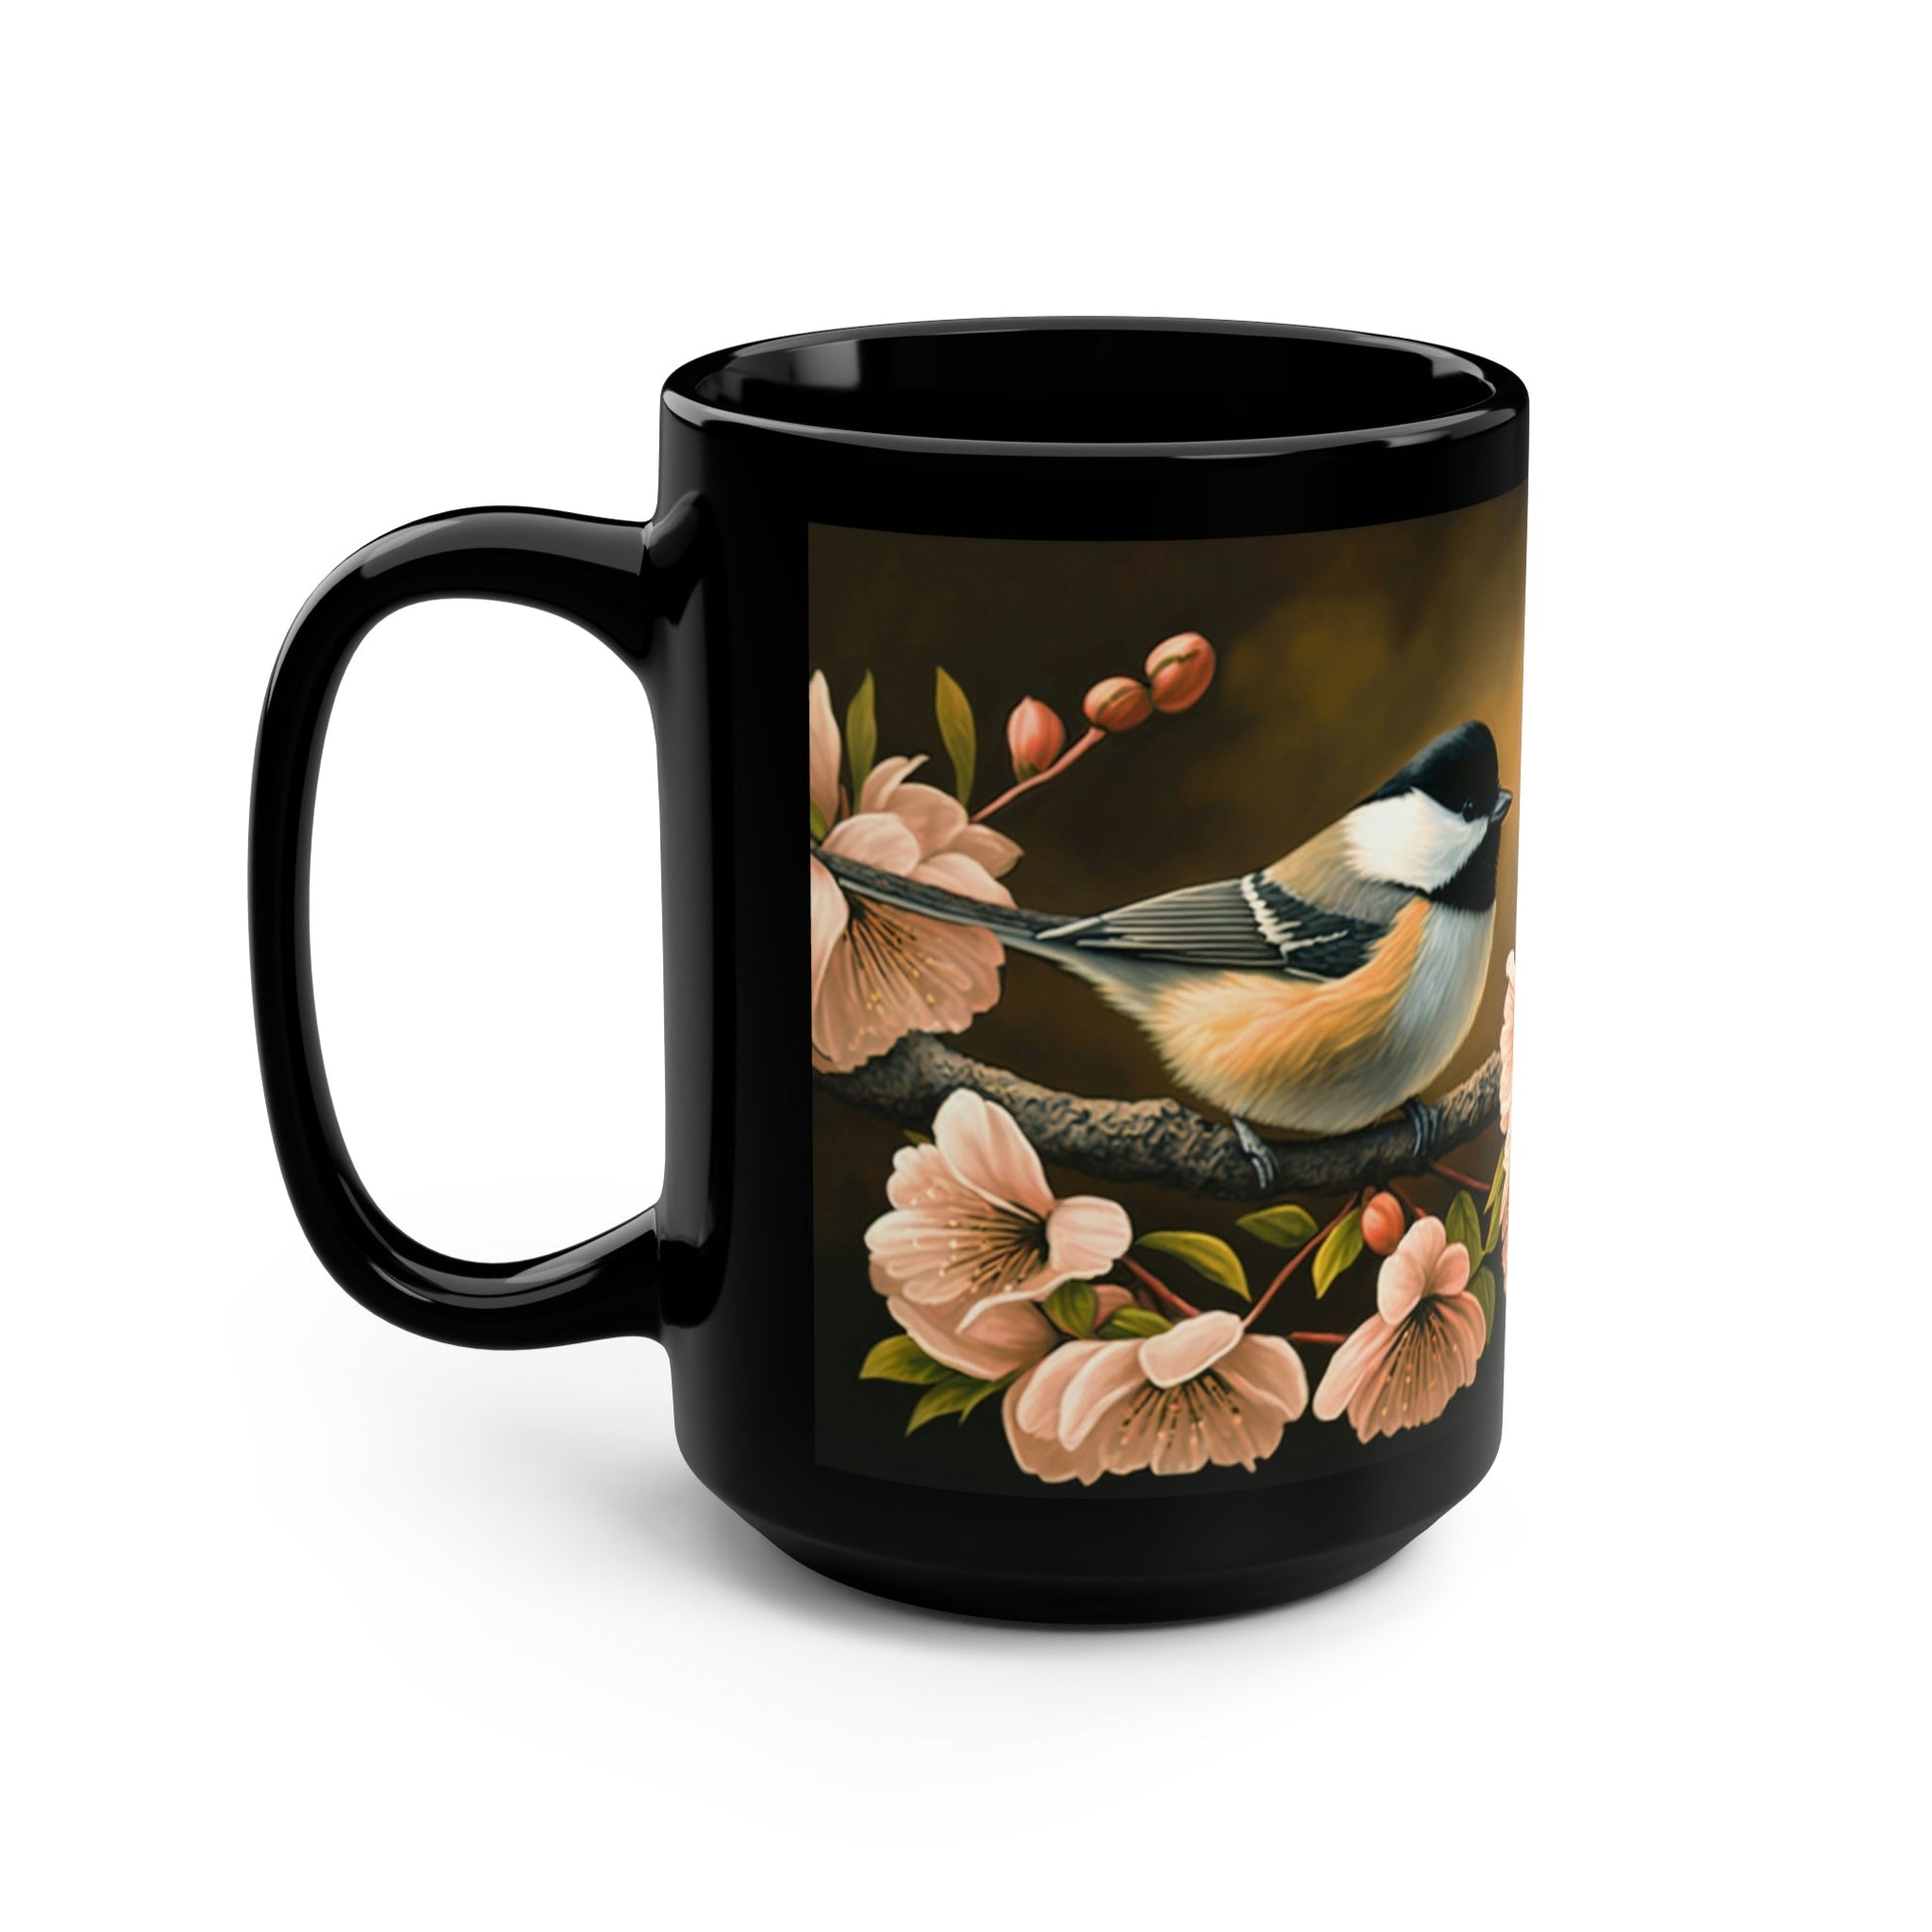 Pair of Chickadees on a Flowering Crabapple Tree - 15 oz Coffee Mug